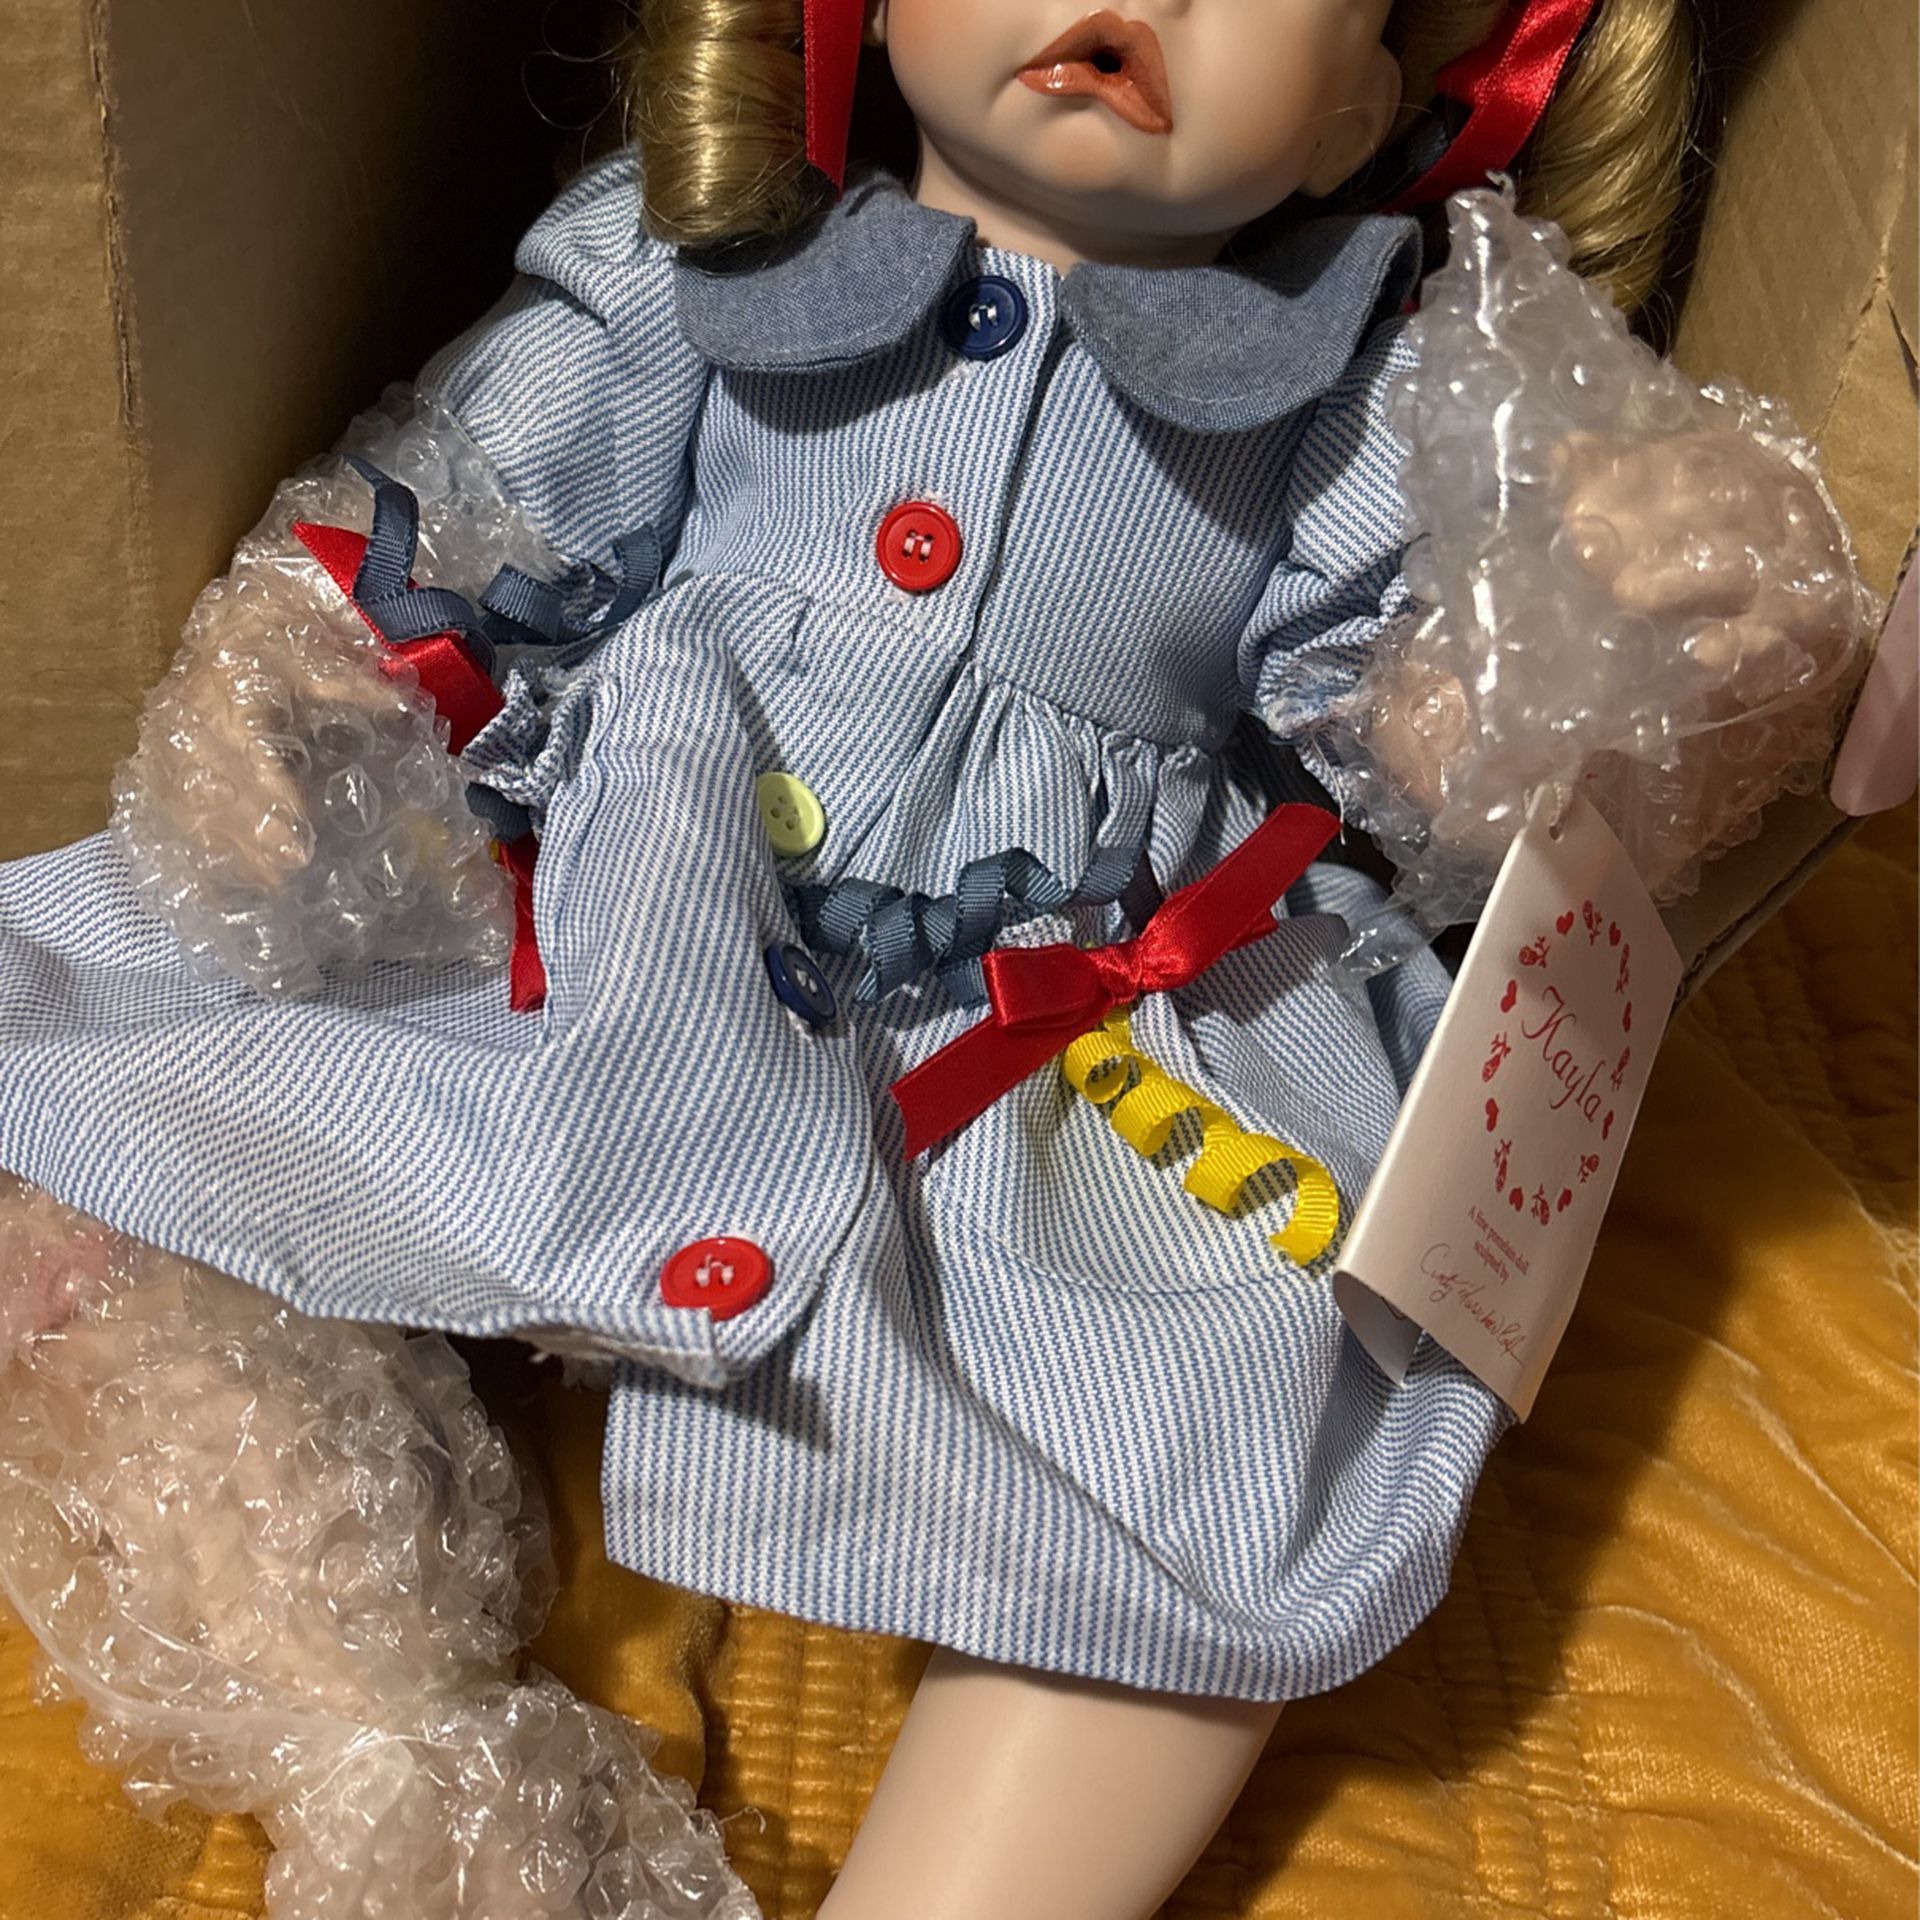 Porcelain Doll Named Kayla A Fine Porcelain Doll Sculpted By Cindy